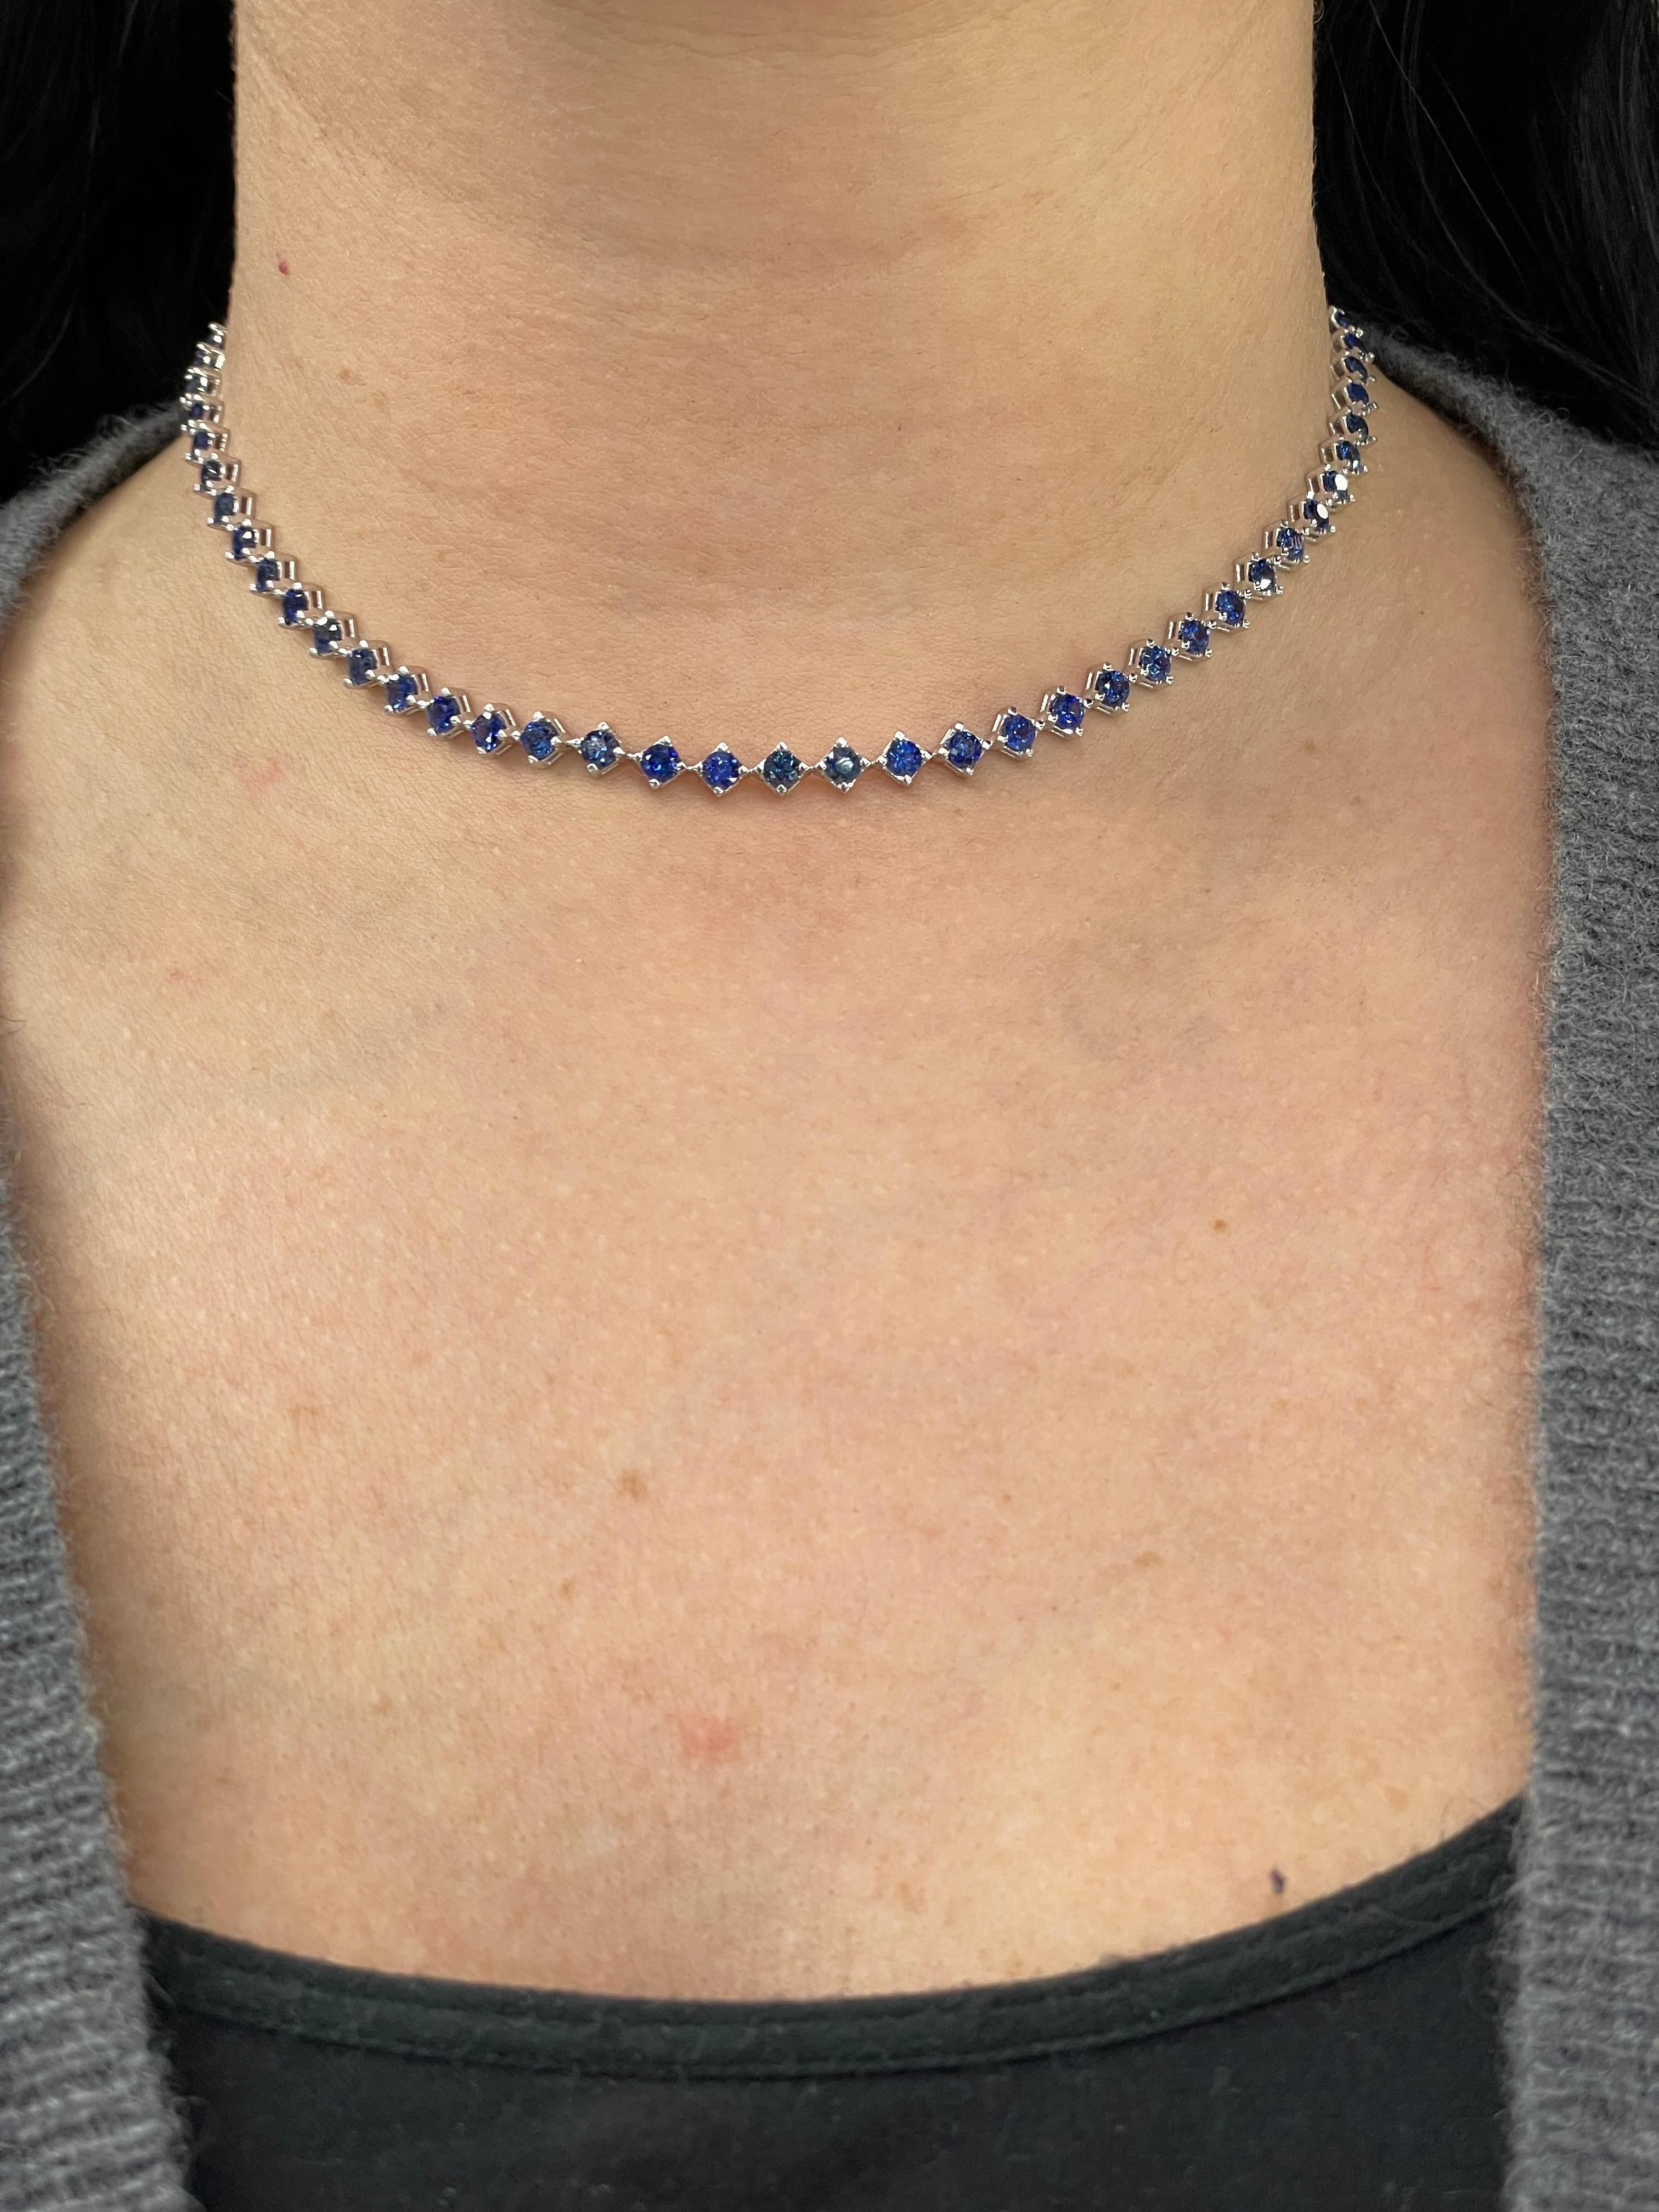 Blue Sapphire Choker Necklace & Bracelet 14 Karat White Gold 6.06 Carats 4